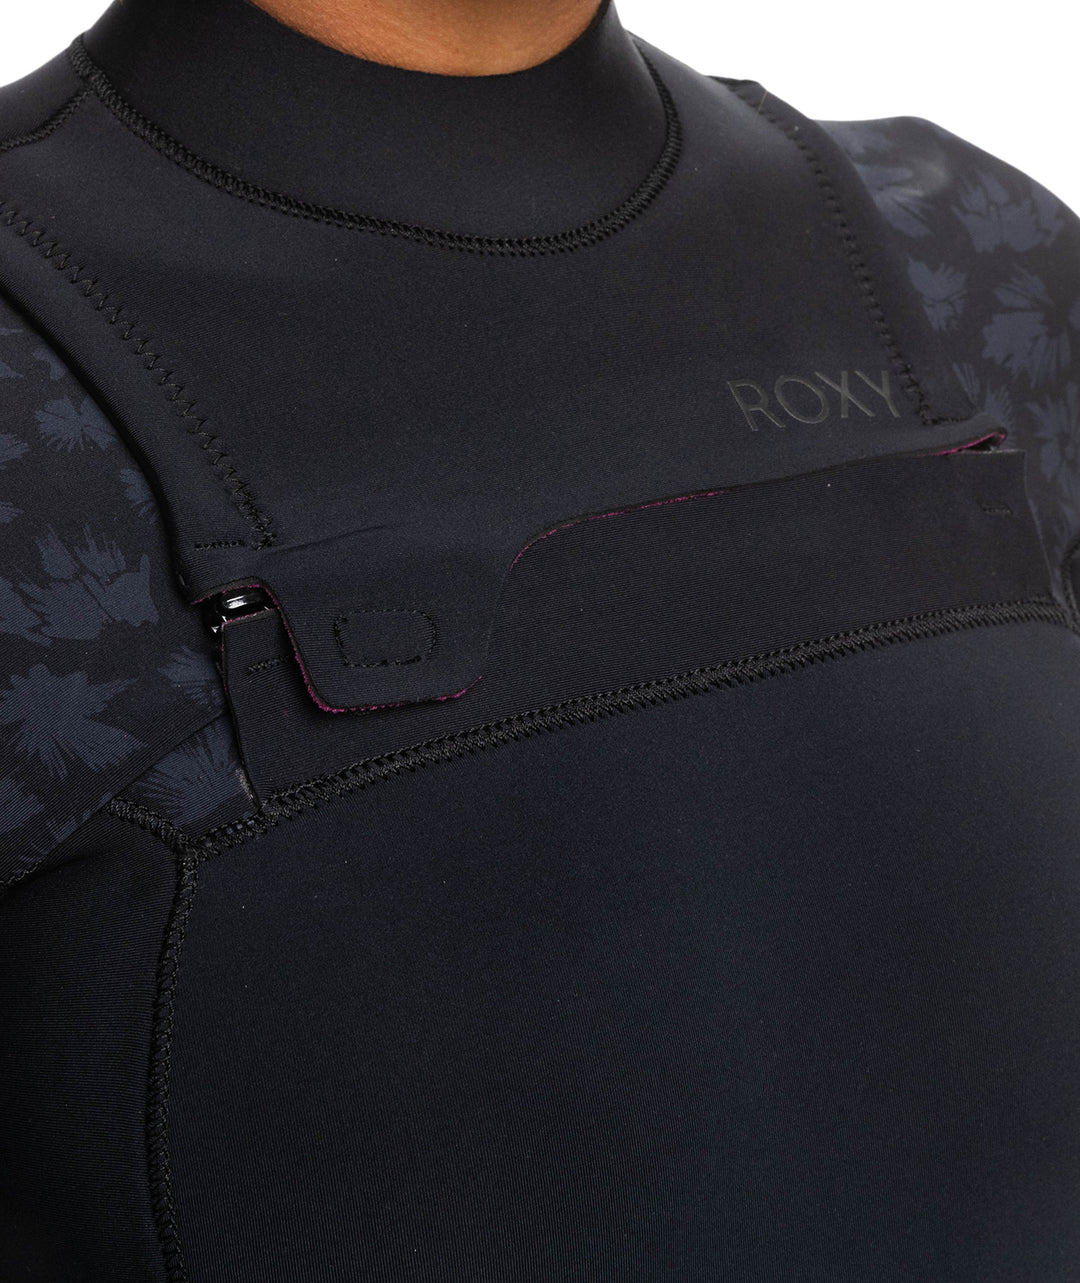 Swell Series 3/2 Front Zip GBS Steamer Wetsuit - Black